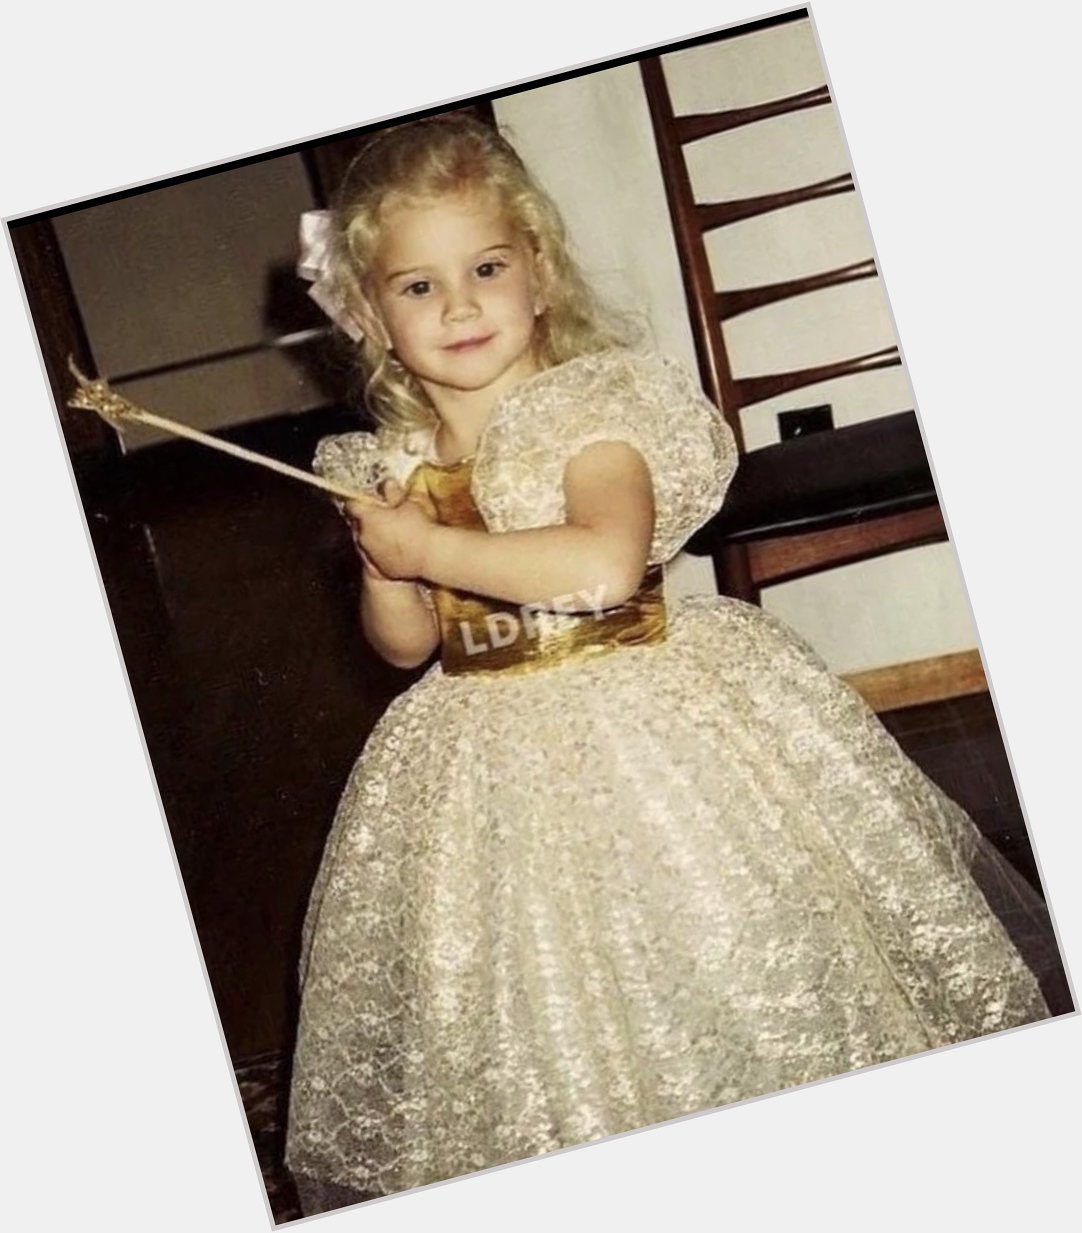 Happy 36th birthday Lana Del Rey!!! 